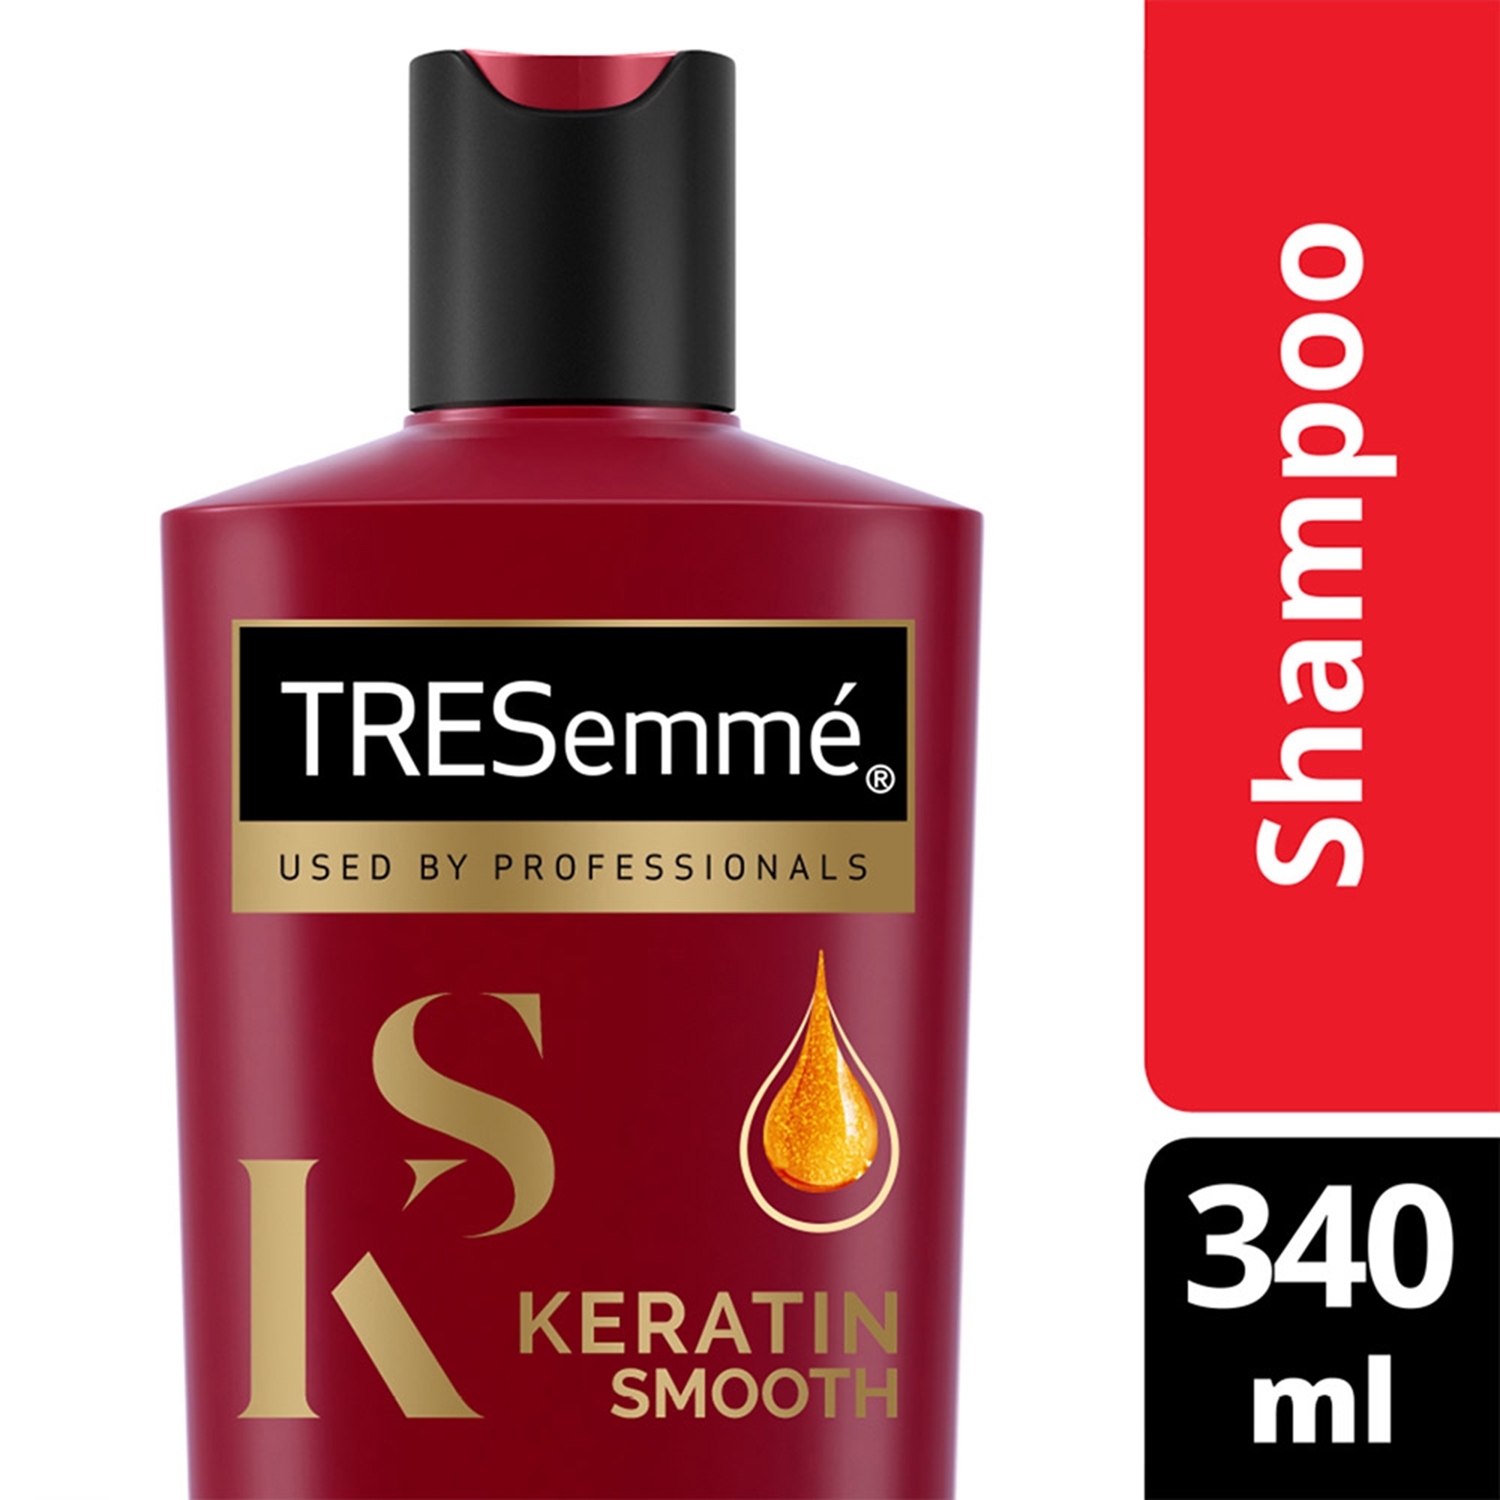 Tresemme | Tresemme Keratin Smooth Shampoo - (340ml)